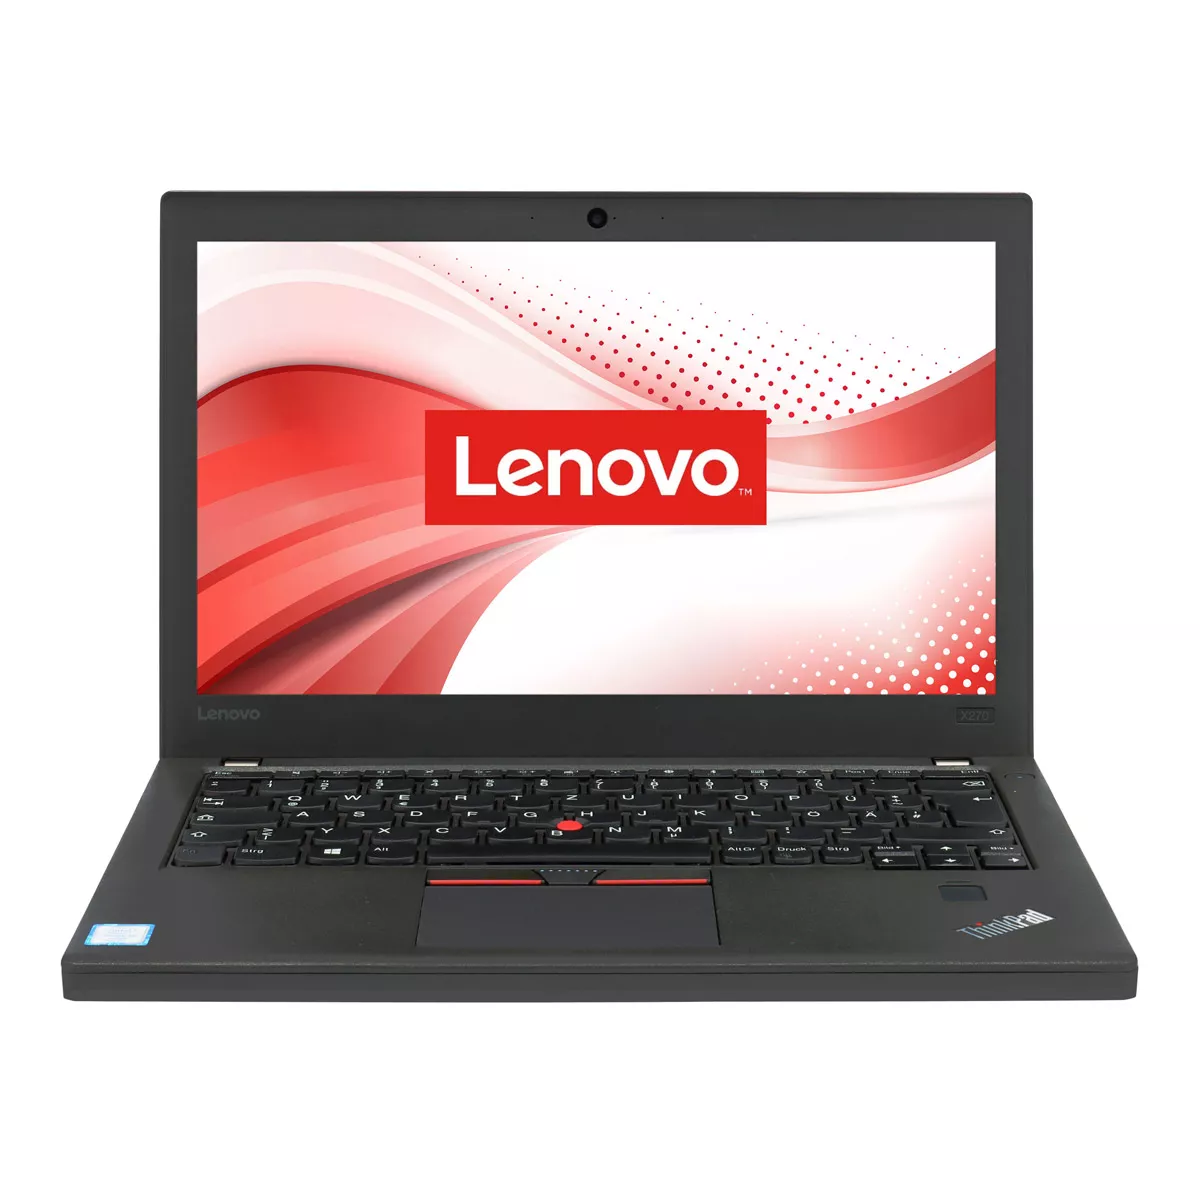 Lenovo ThinkPad X270 Core i5 6300U Full-HD 240 GB NVMe SSD Webcam B